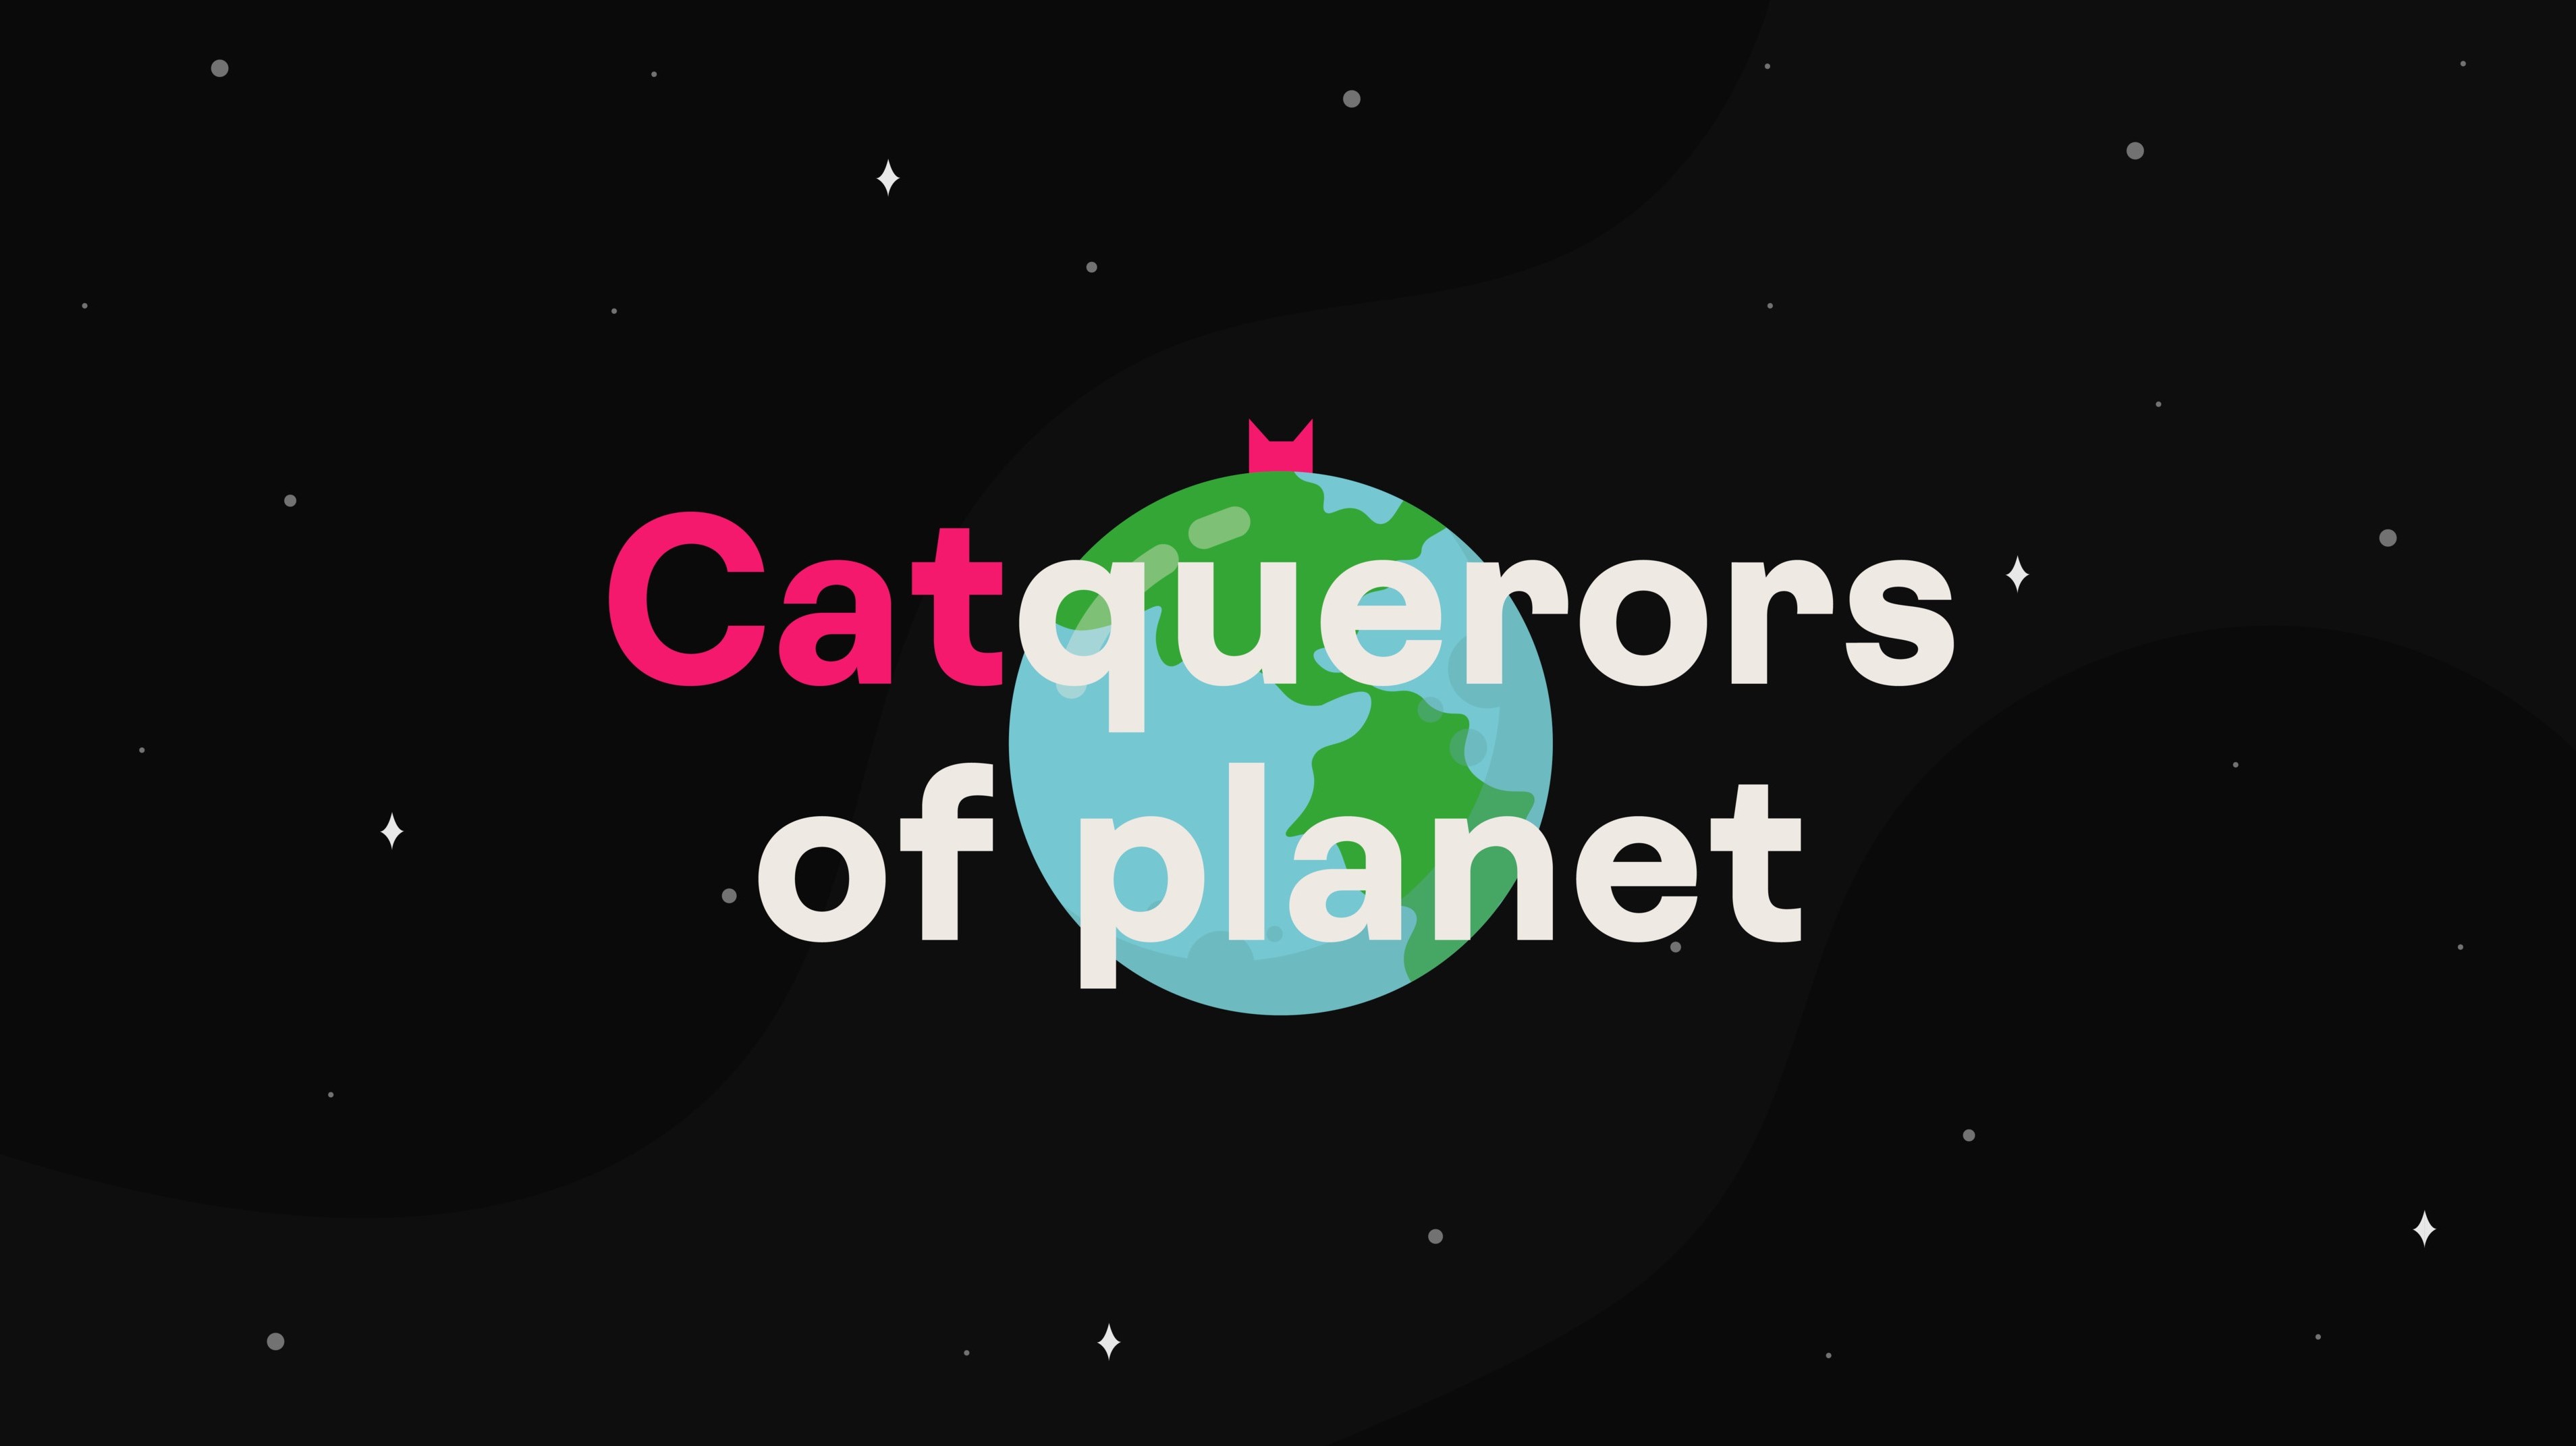 CATquerors of planets